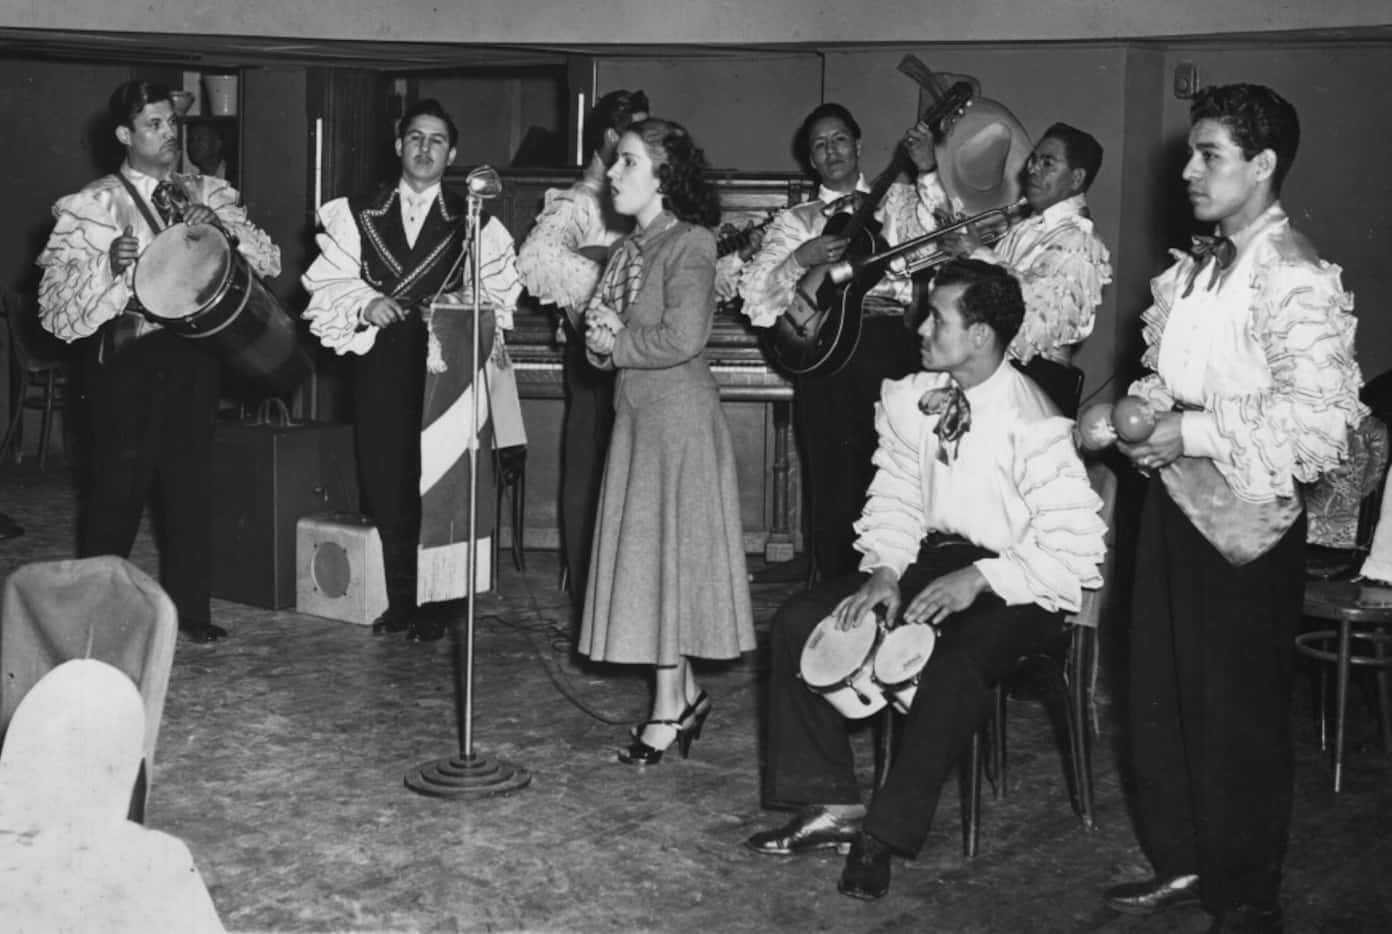 The Joe Azcona Band performs in the El Fenix ballroom in the 1940s